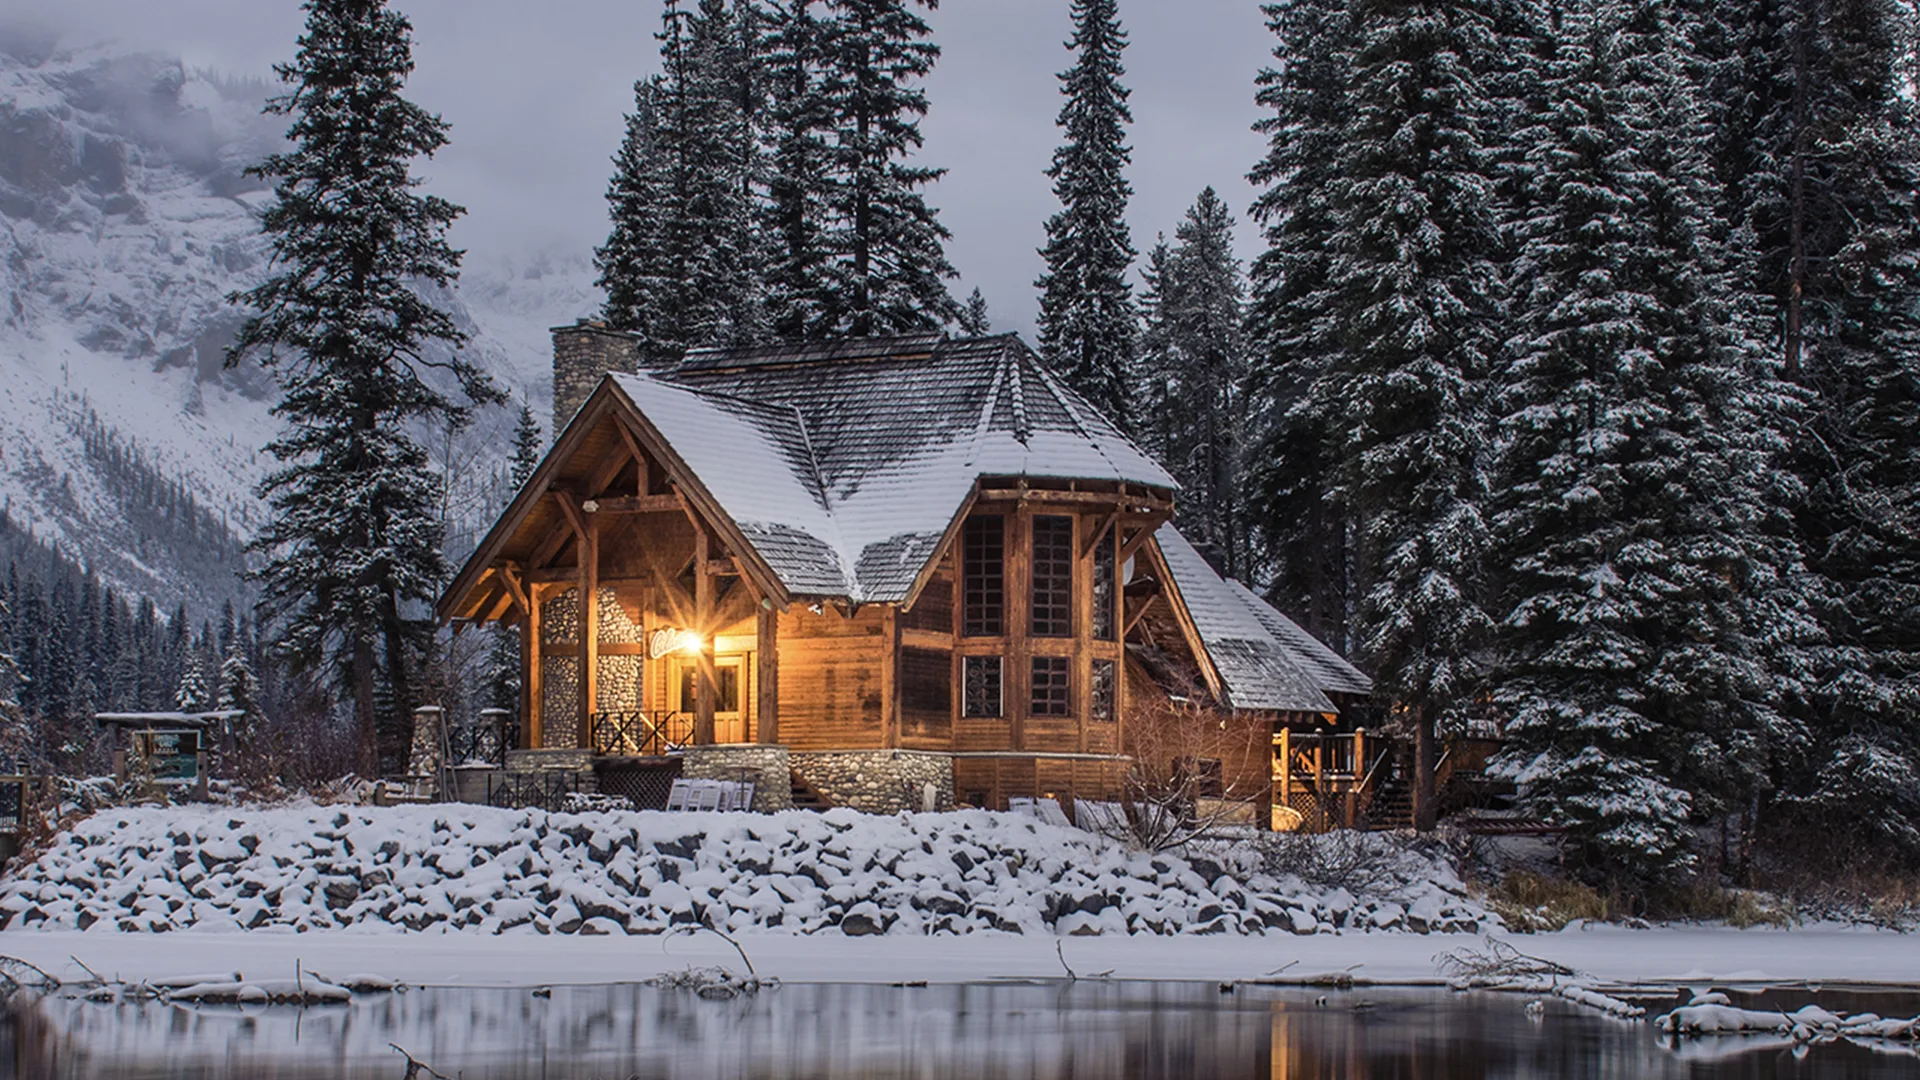 Log cabin in snowy setting